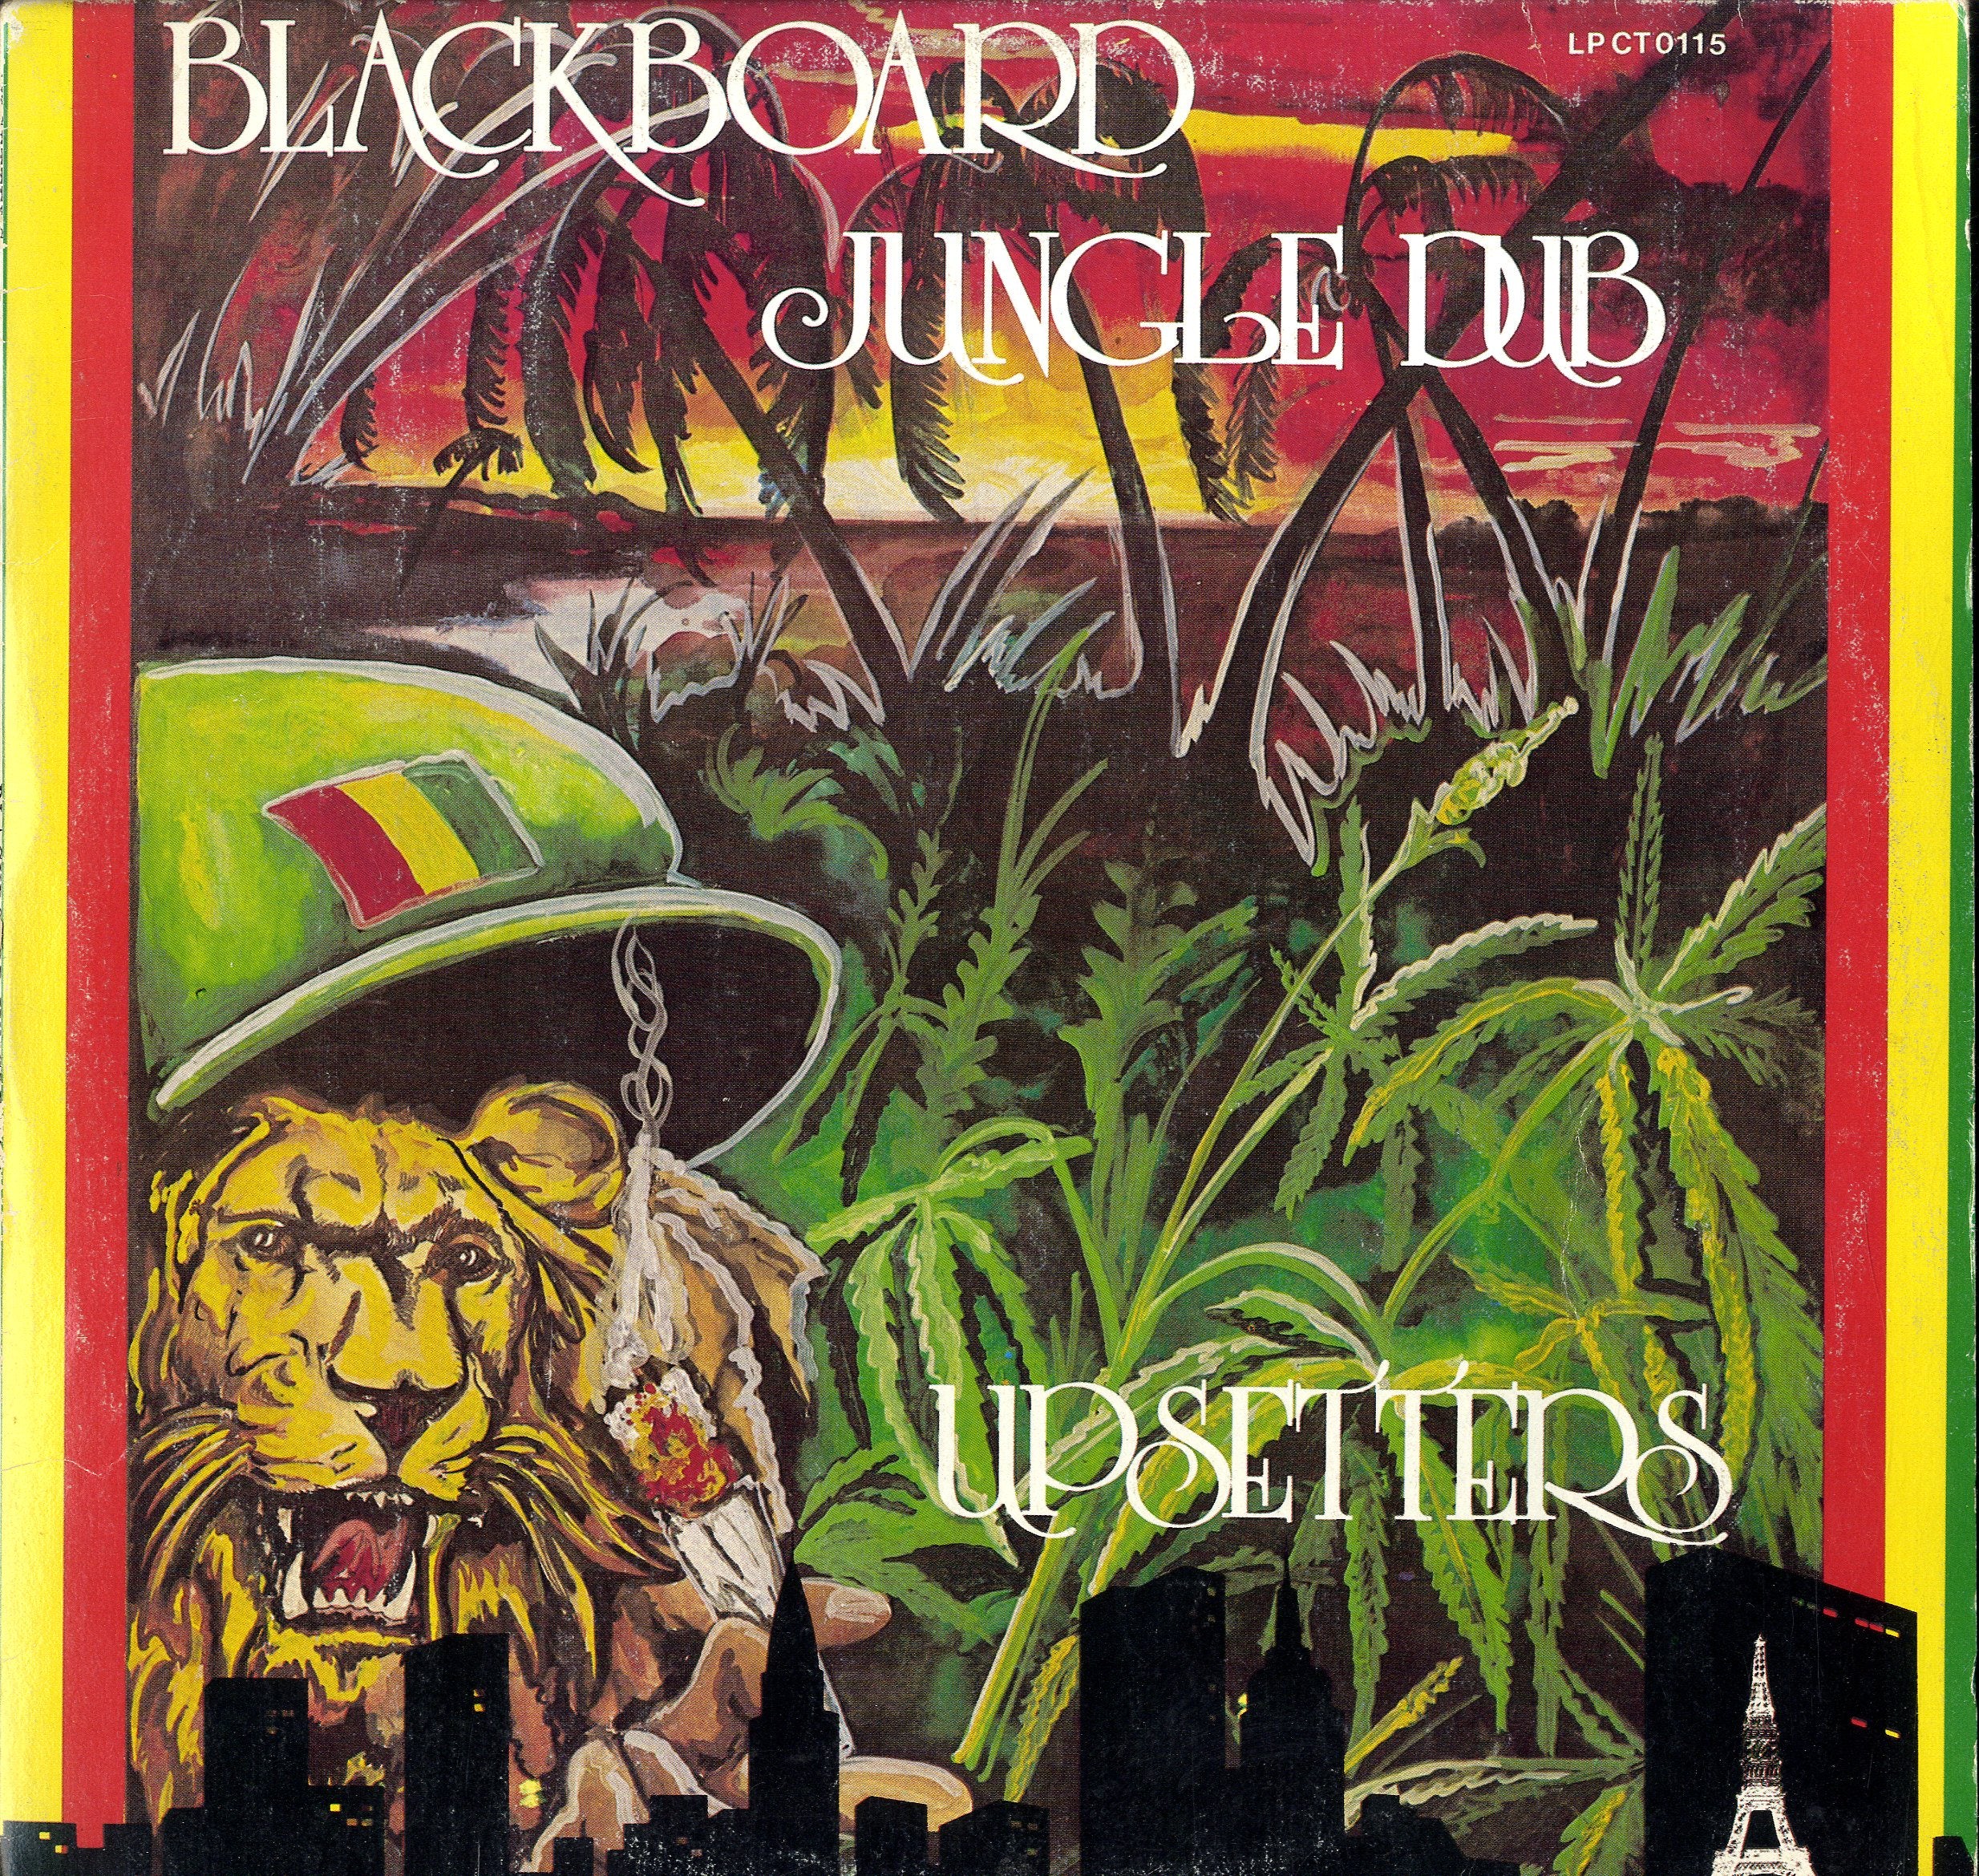 UPSETTERS [Blackboard Jungle]